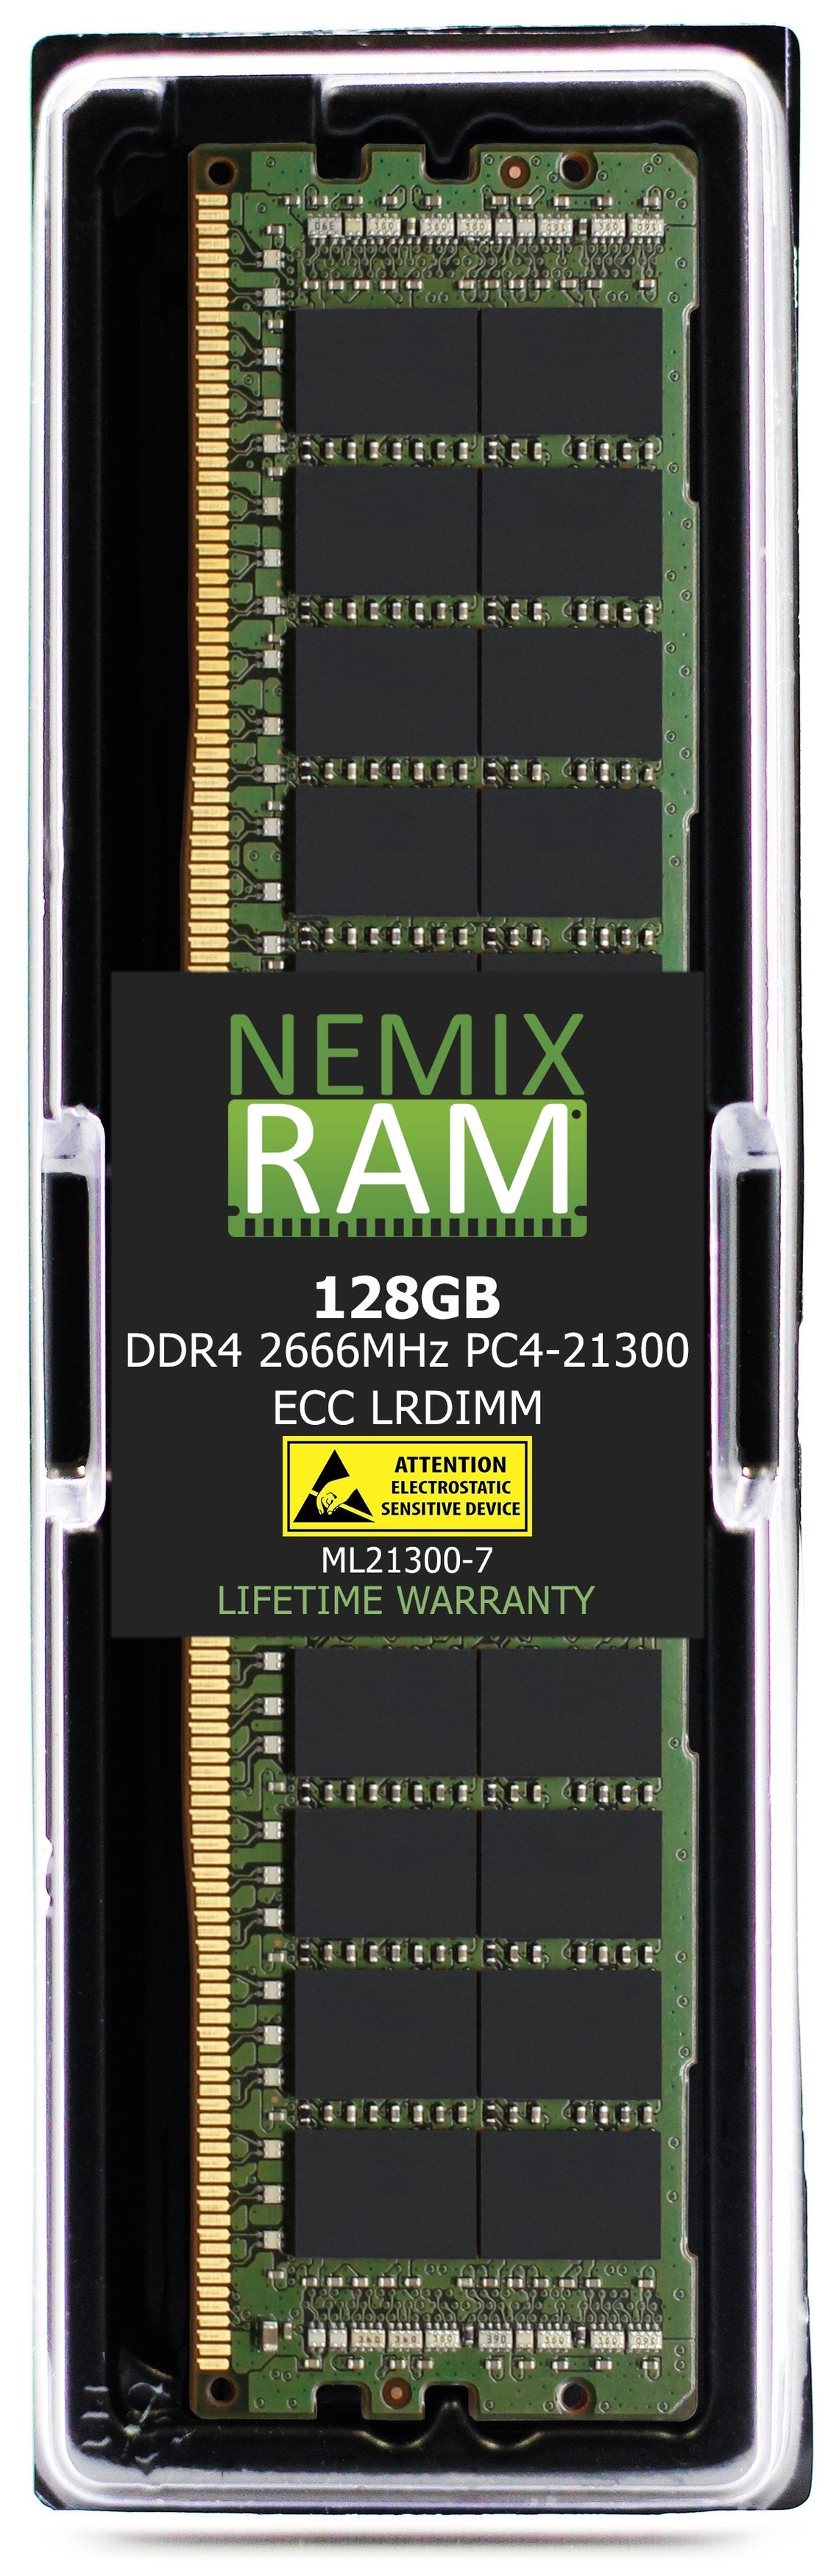 NEC Express5800 T120h Memory Module N8102-713 128GBDDR4 2666MHZ PC4-21300 LRDIMM